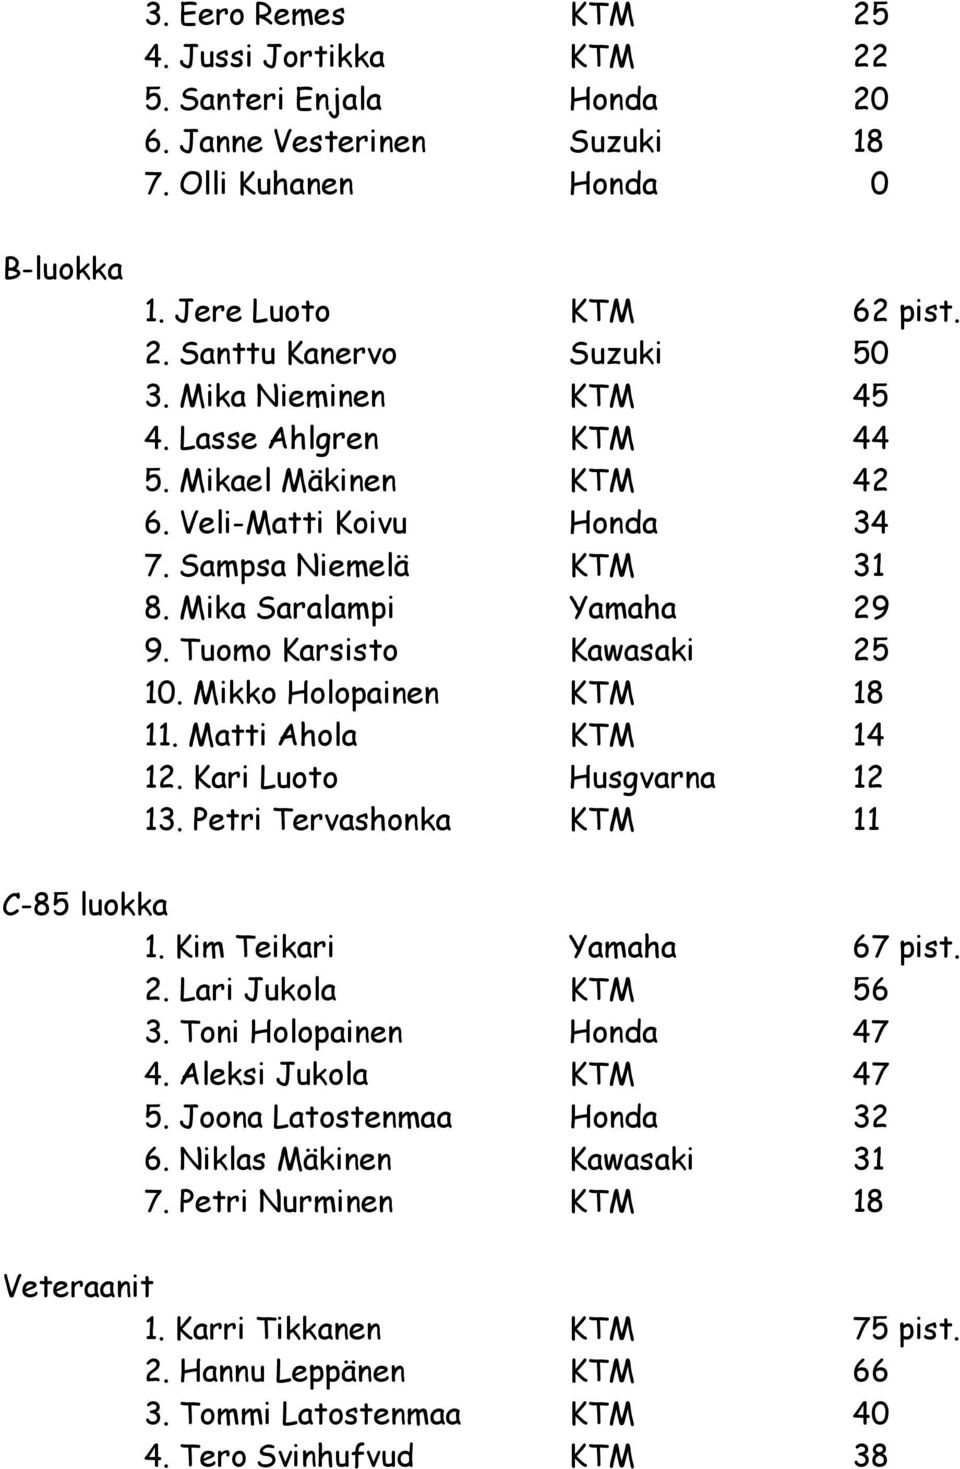 Mikko Holopainen KTM 18 11. Matti Ahola KTM 14 12. Kari Luoto Husgvarna 12 13. Petri Tervashonka KTM 11 C-85 luokka 1. Kim Teikari Yamaha 67 pist. 2. Lari Jukola KTM 56 3. Toni Holopainen Honda 47 4.